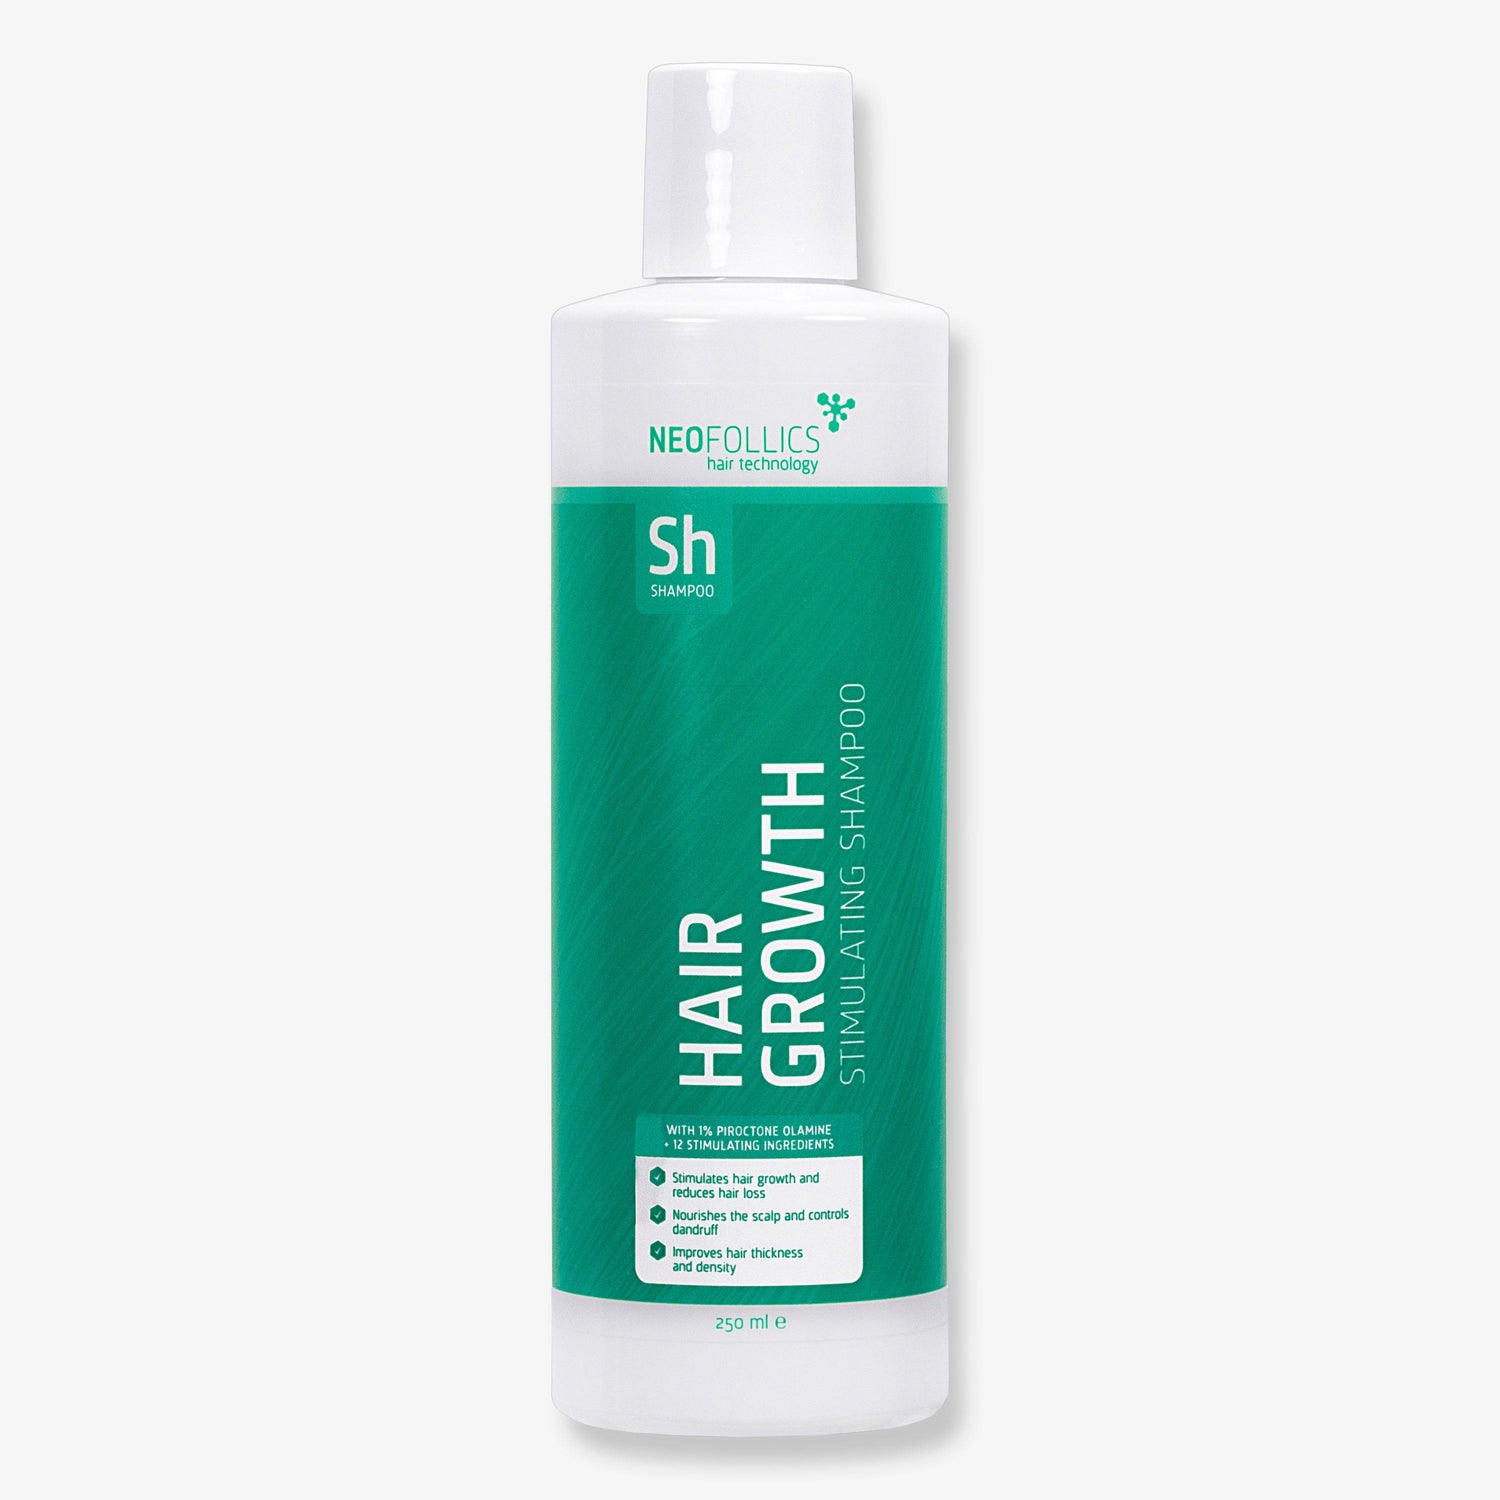 Neofolics shampoo met 1% piroctone olamine - SerumGeeks